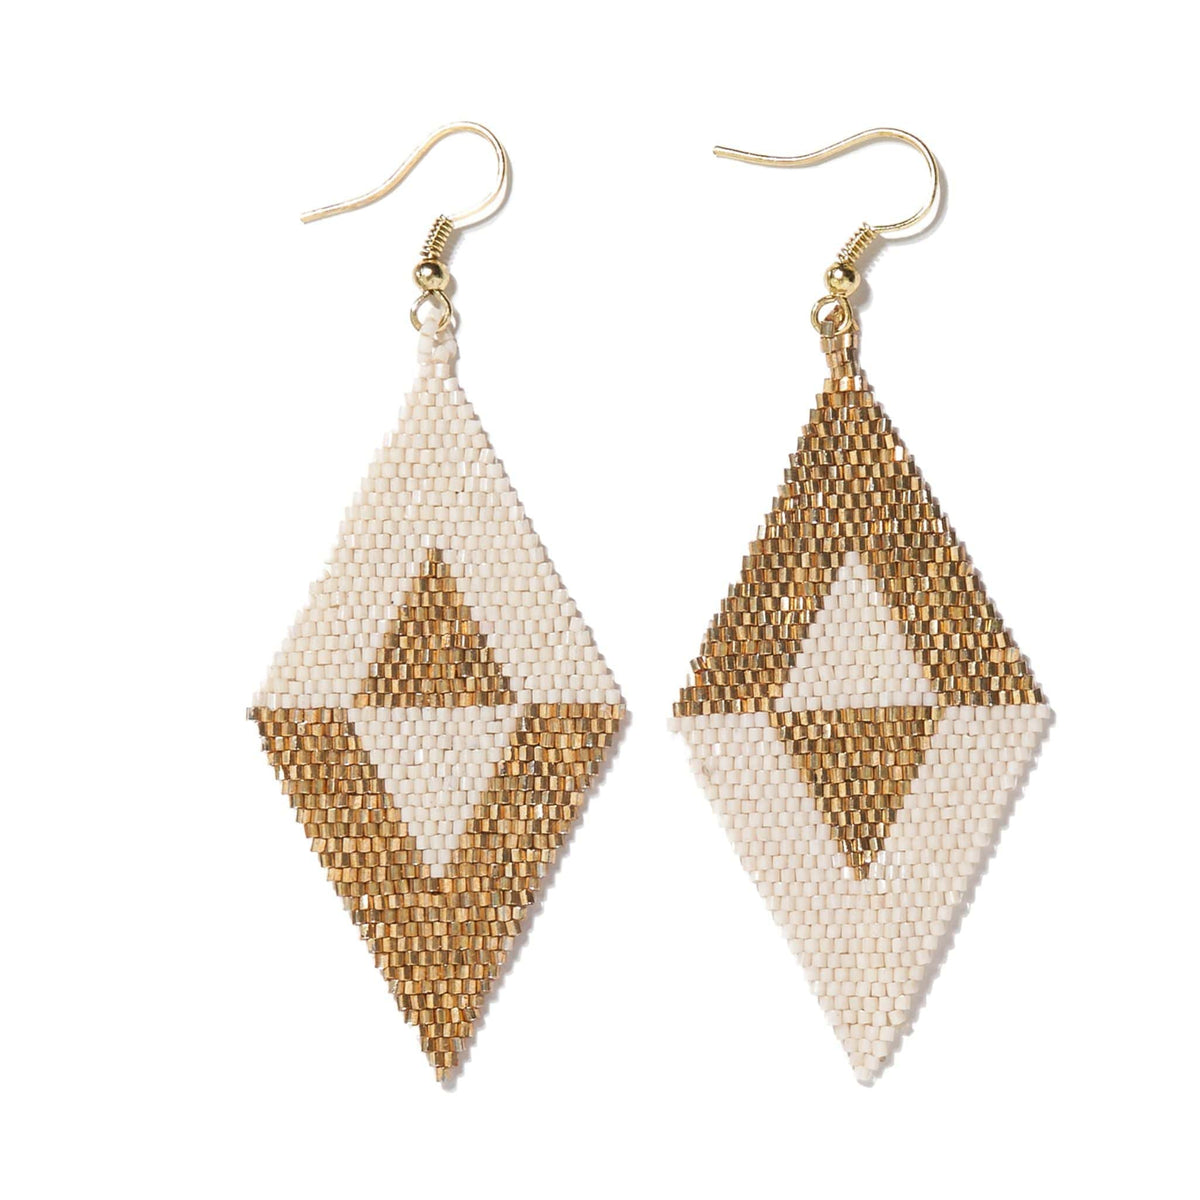 Luxe Open Triangle Earrings - FAB Accessories Inc.